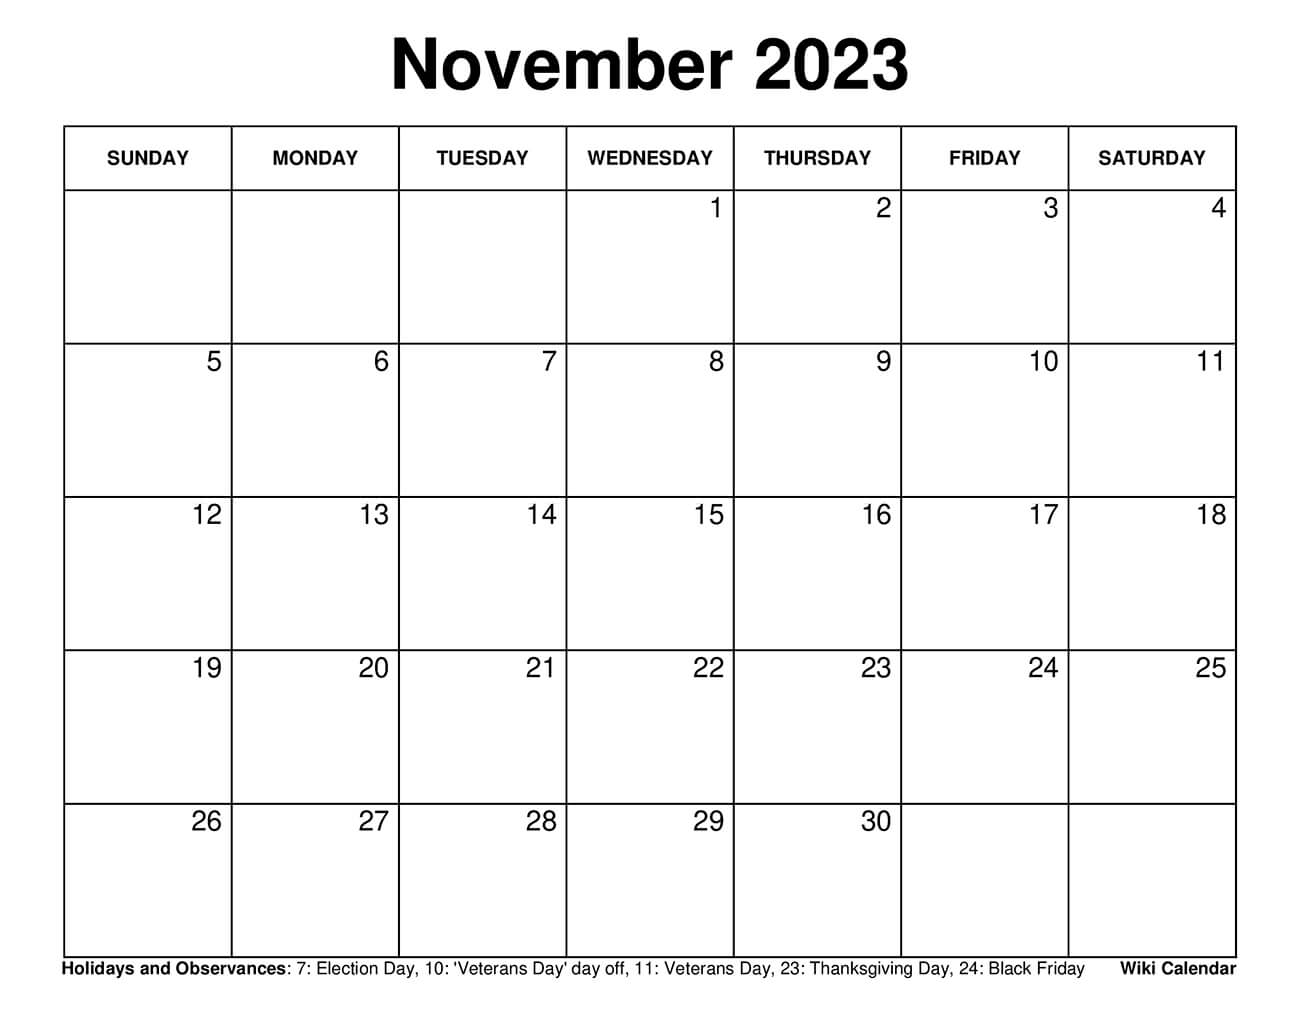 free-november-2023-calendar-with-holidays-get-calendar-2023-update